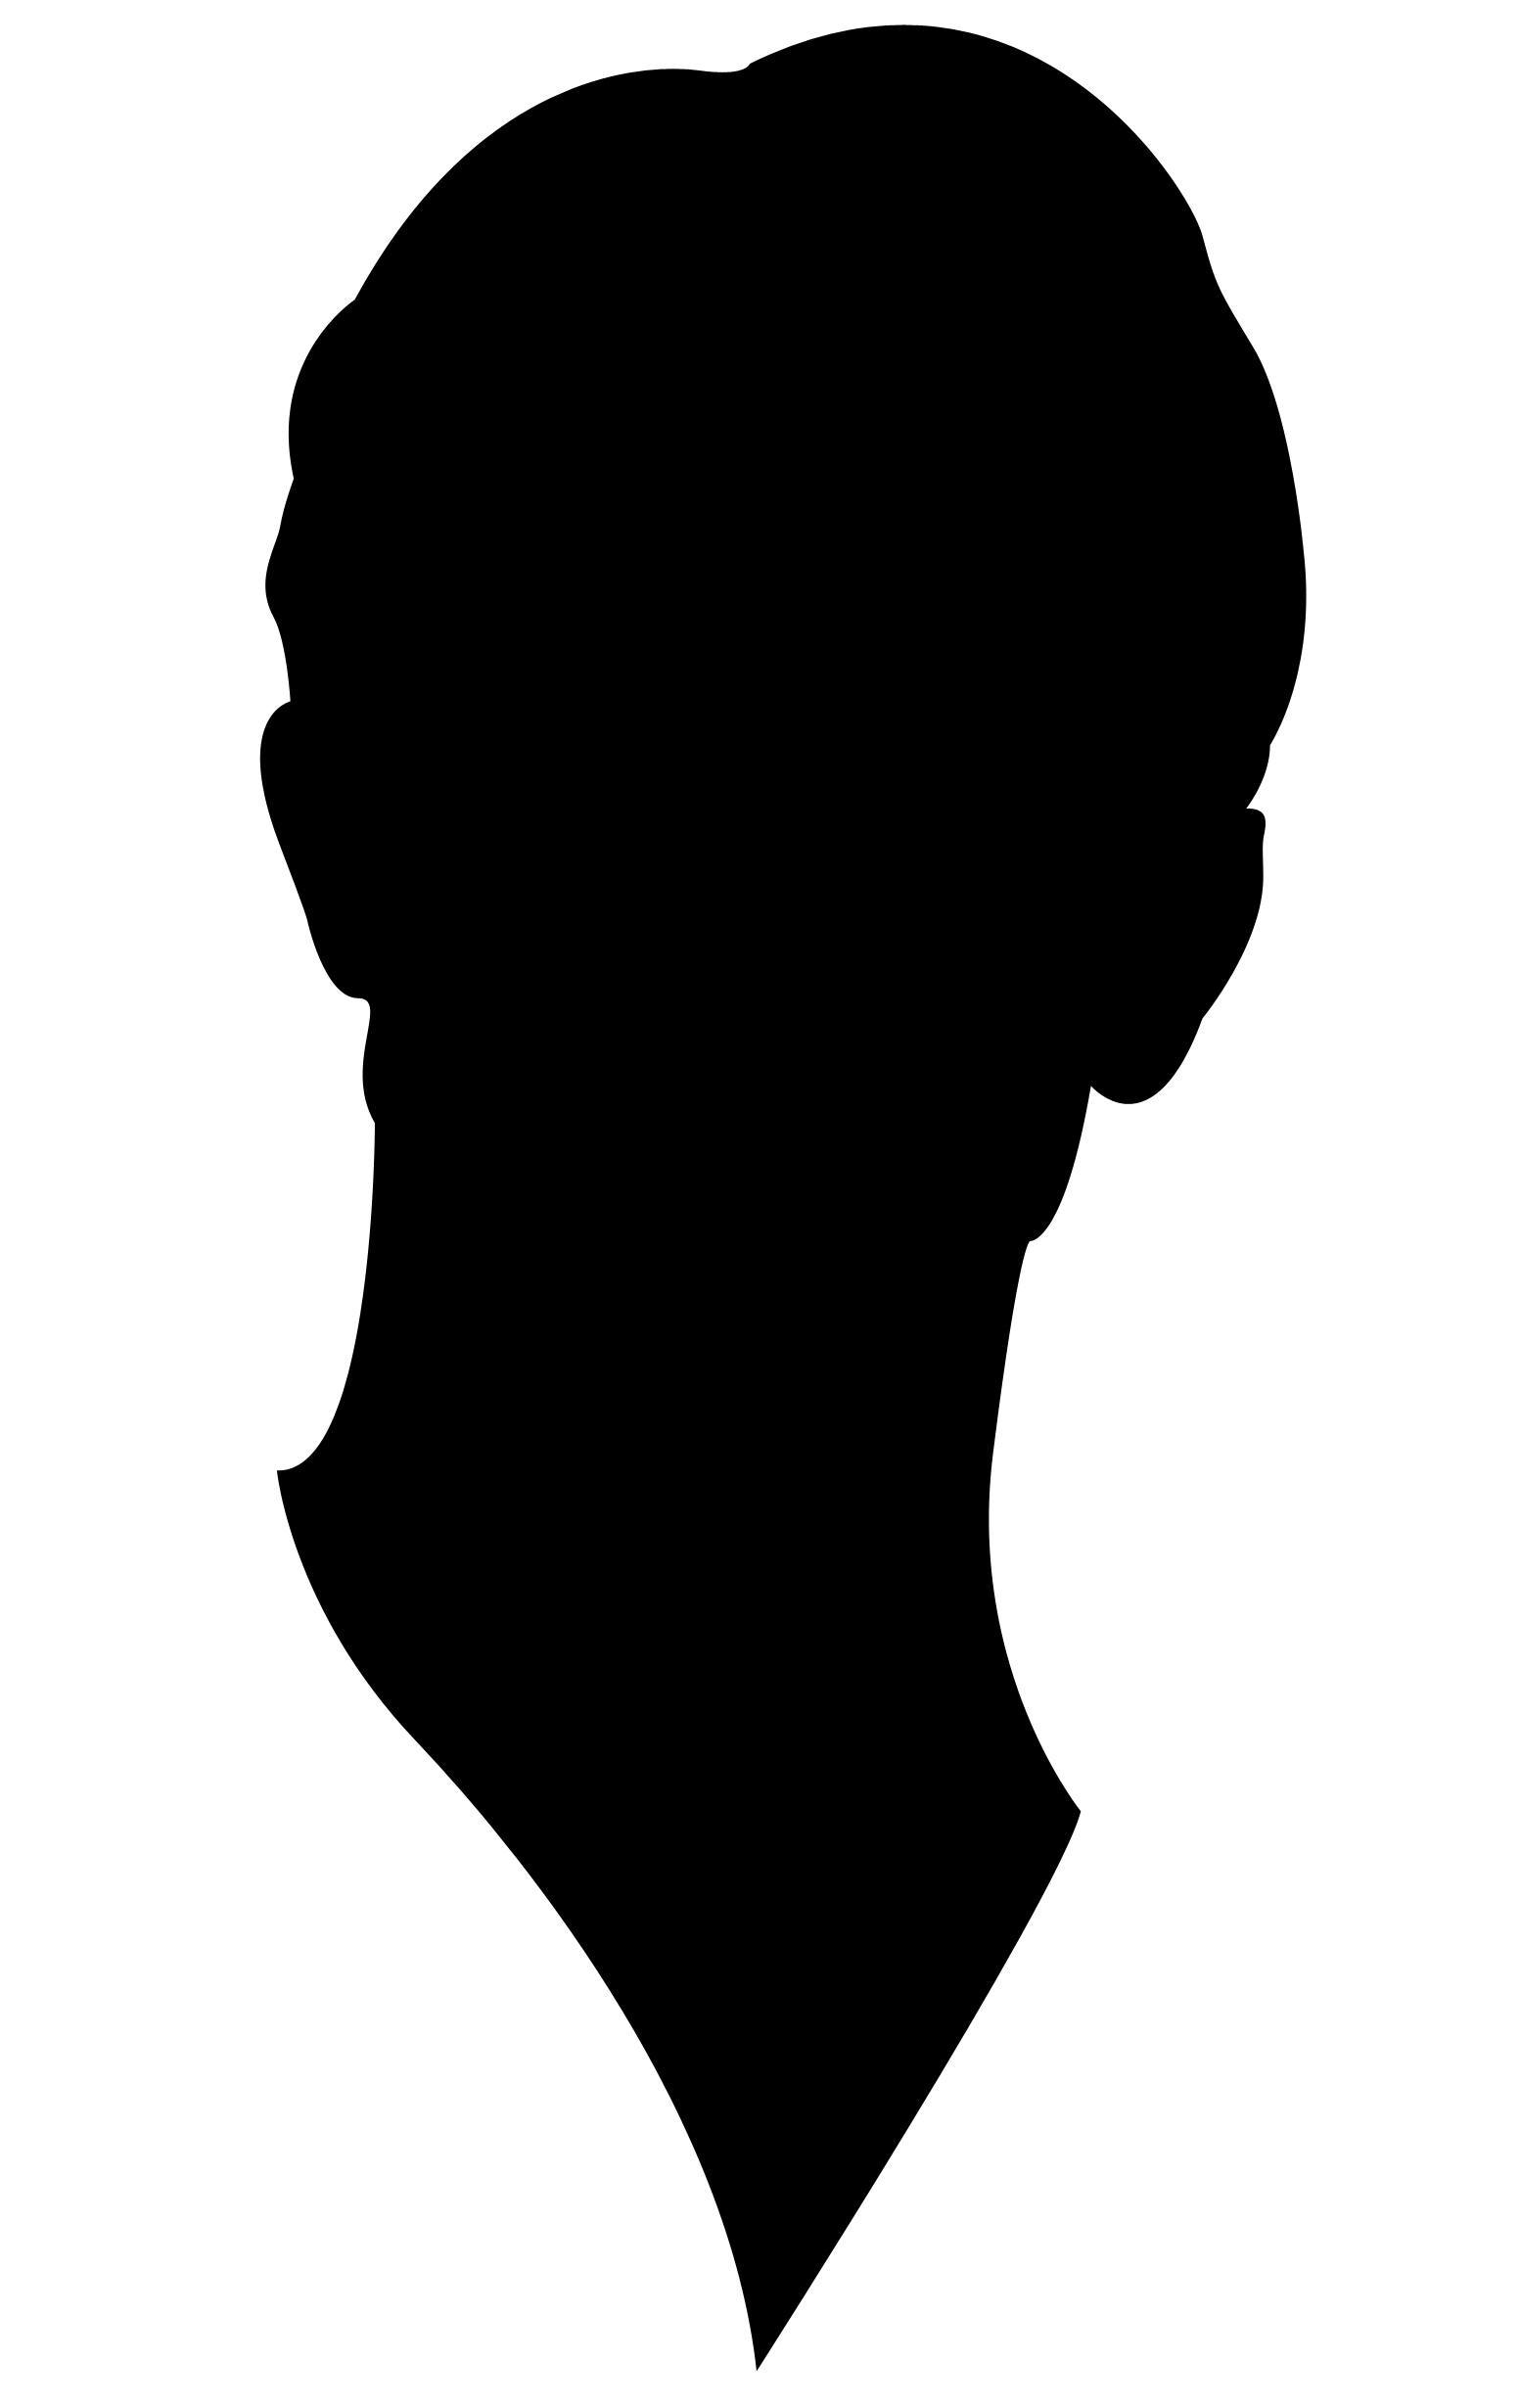 Pirate clipart silhouette. Head person free clipground